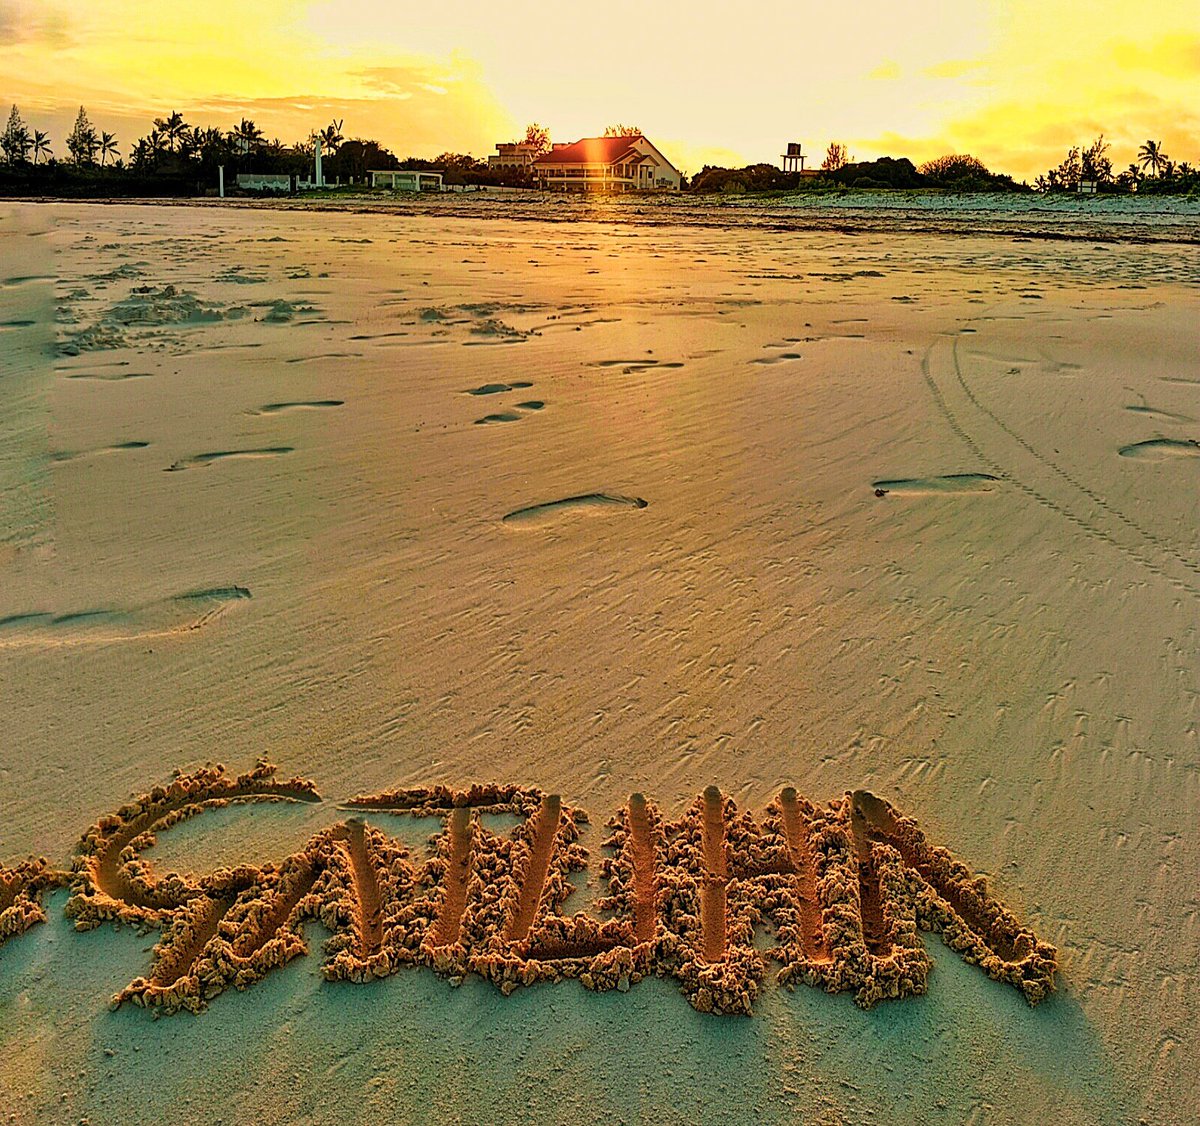 Show me your name on sand and I'll show you mine😍📸
#CAMONCapture #CAMON30Series